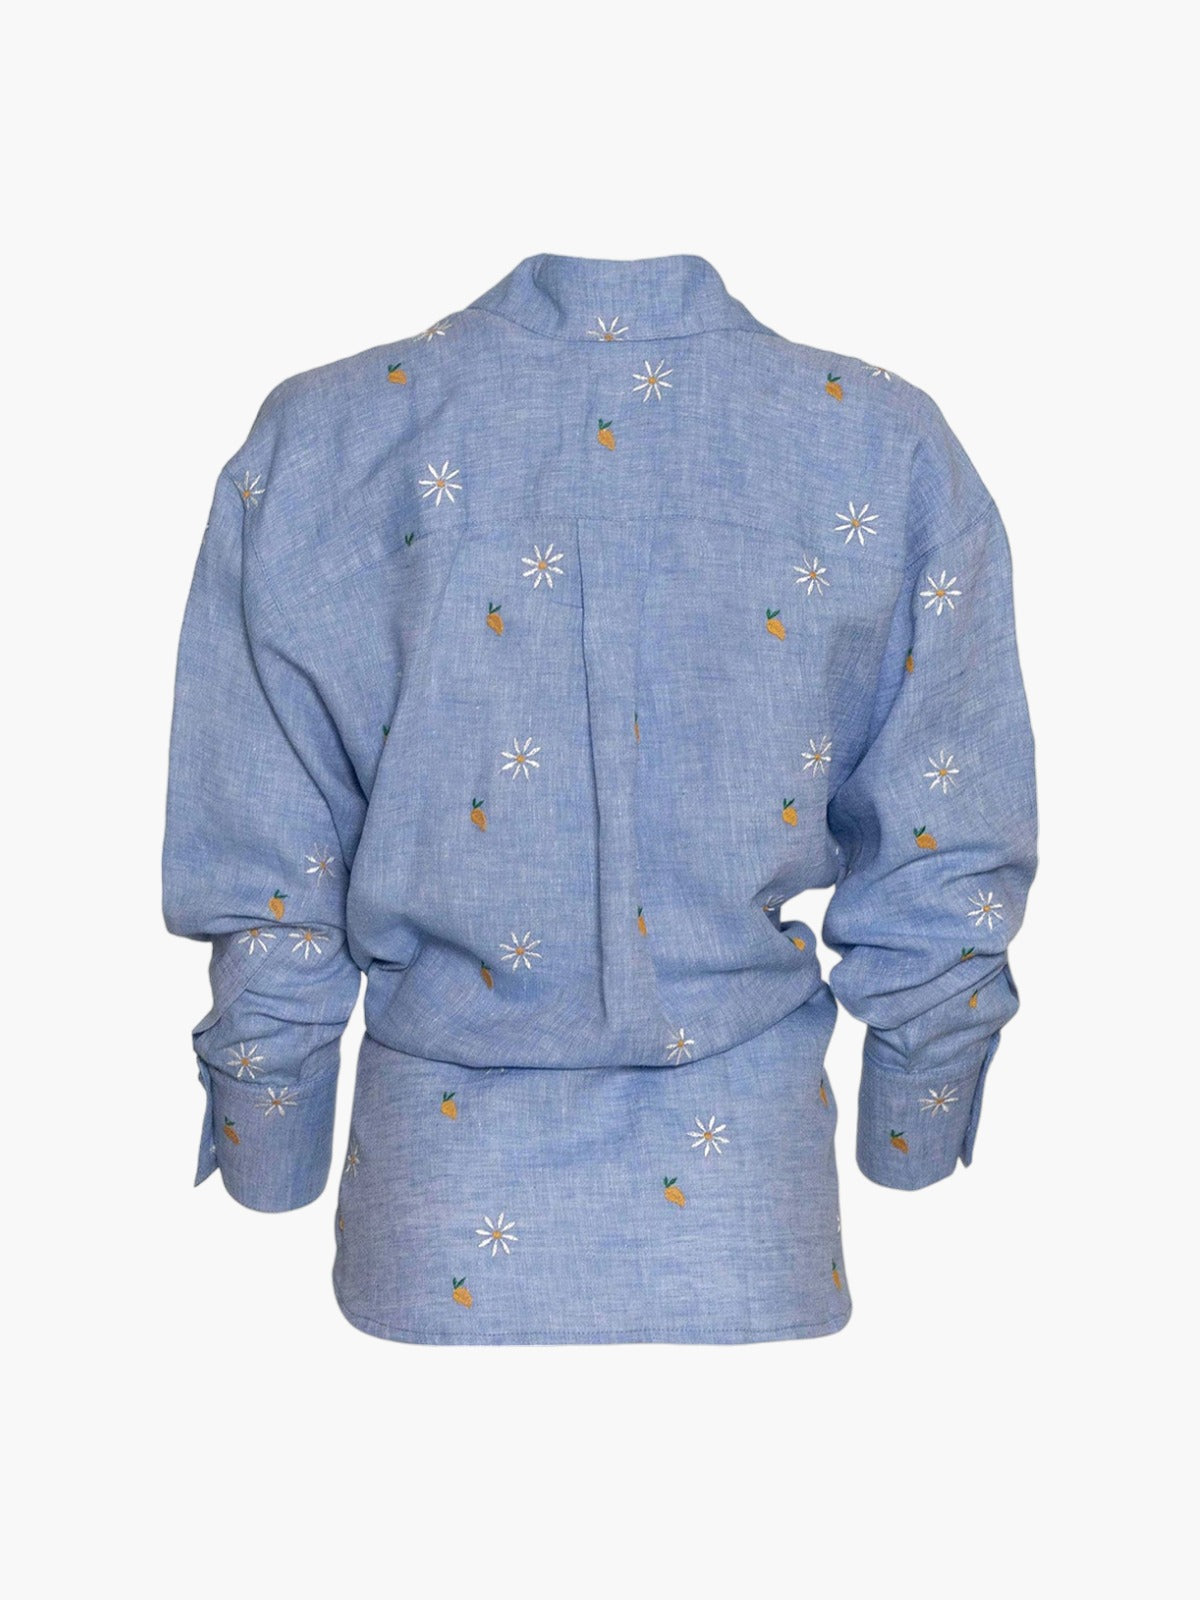 Button Down Shirt | Mango Camomile Blue Button Down Shirt | Mango Camomile Blue